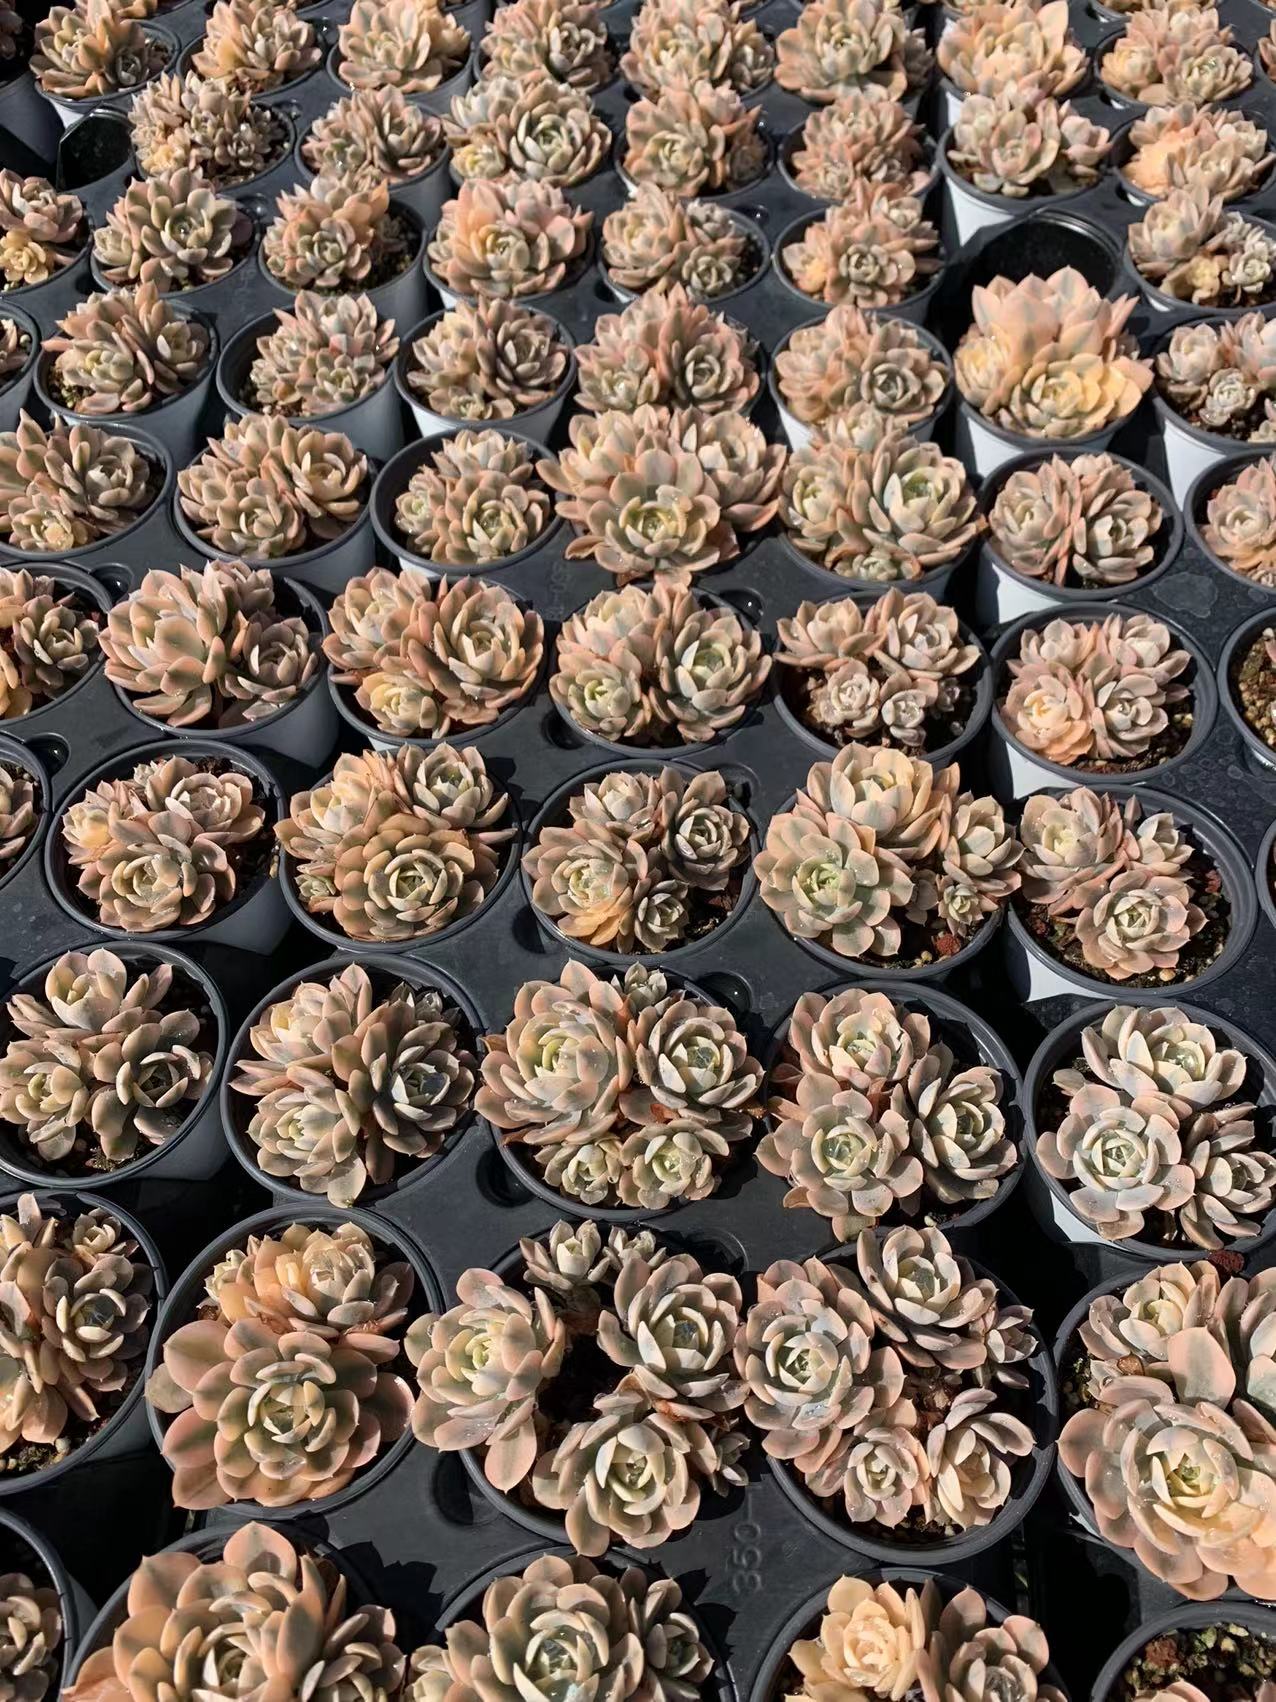 Lu's Brokat (Topfgröße 9 cm)/Echeveria/Bunte natürliche lebende Pflanzen, Sukkulenten